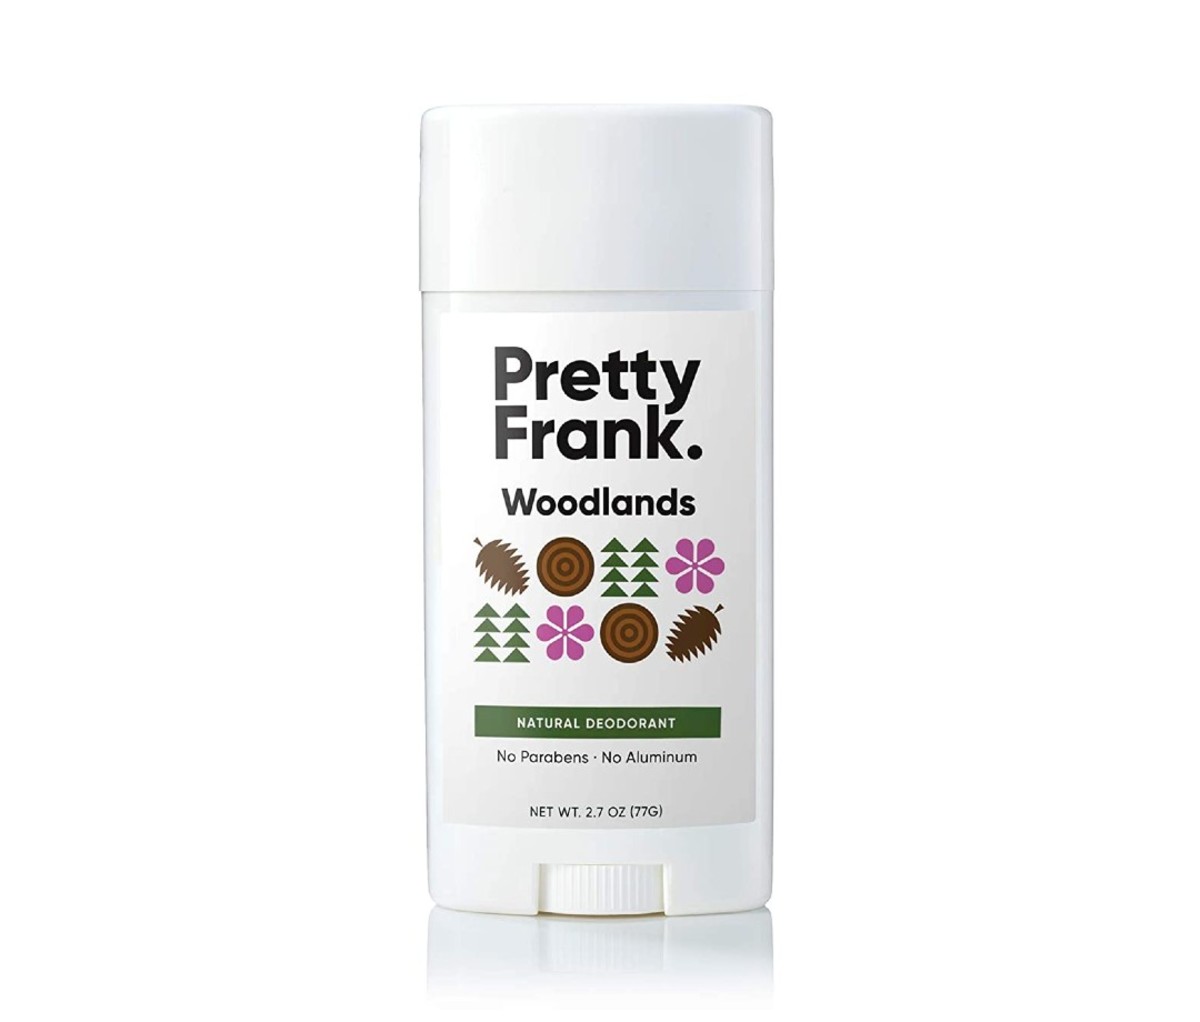 Pretty Frank’s Natural Deodorant